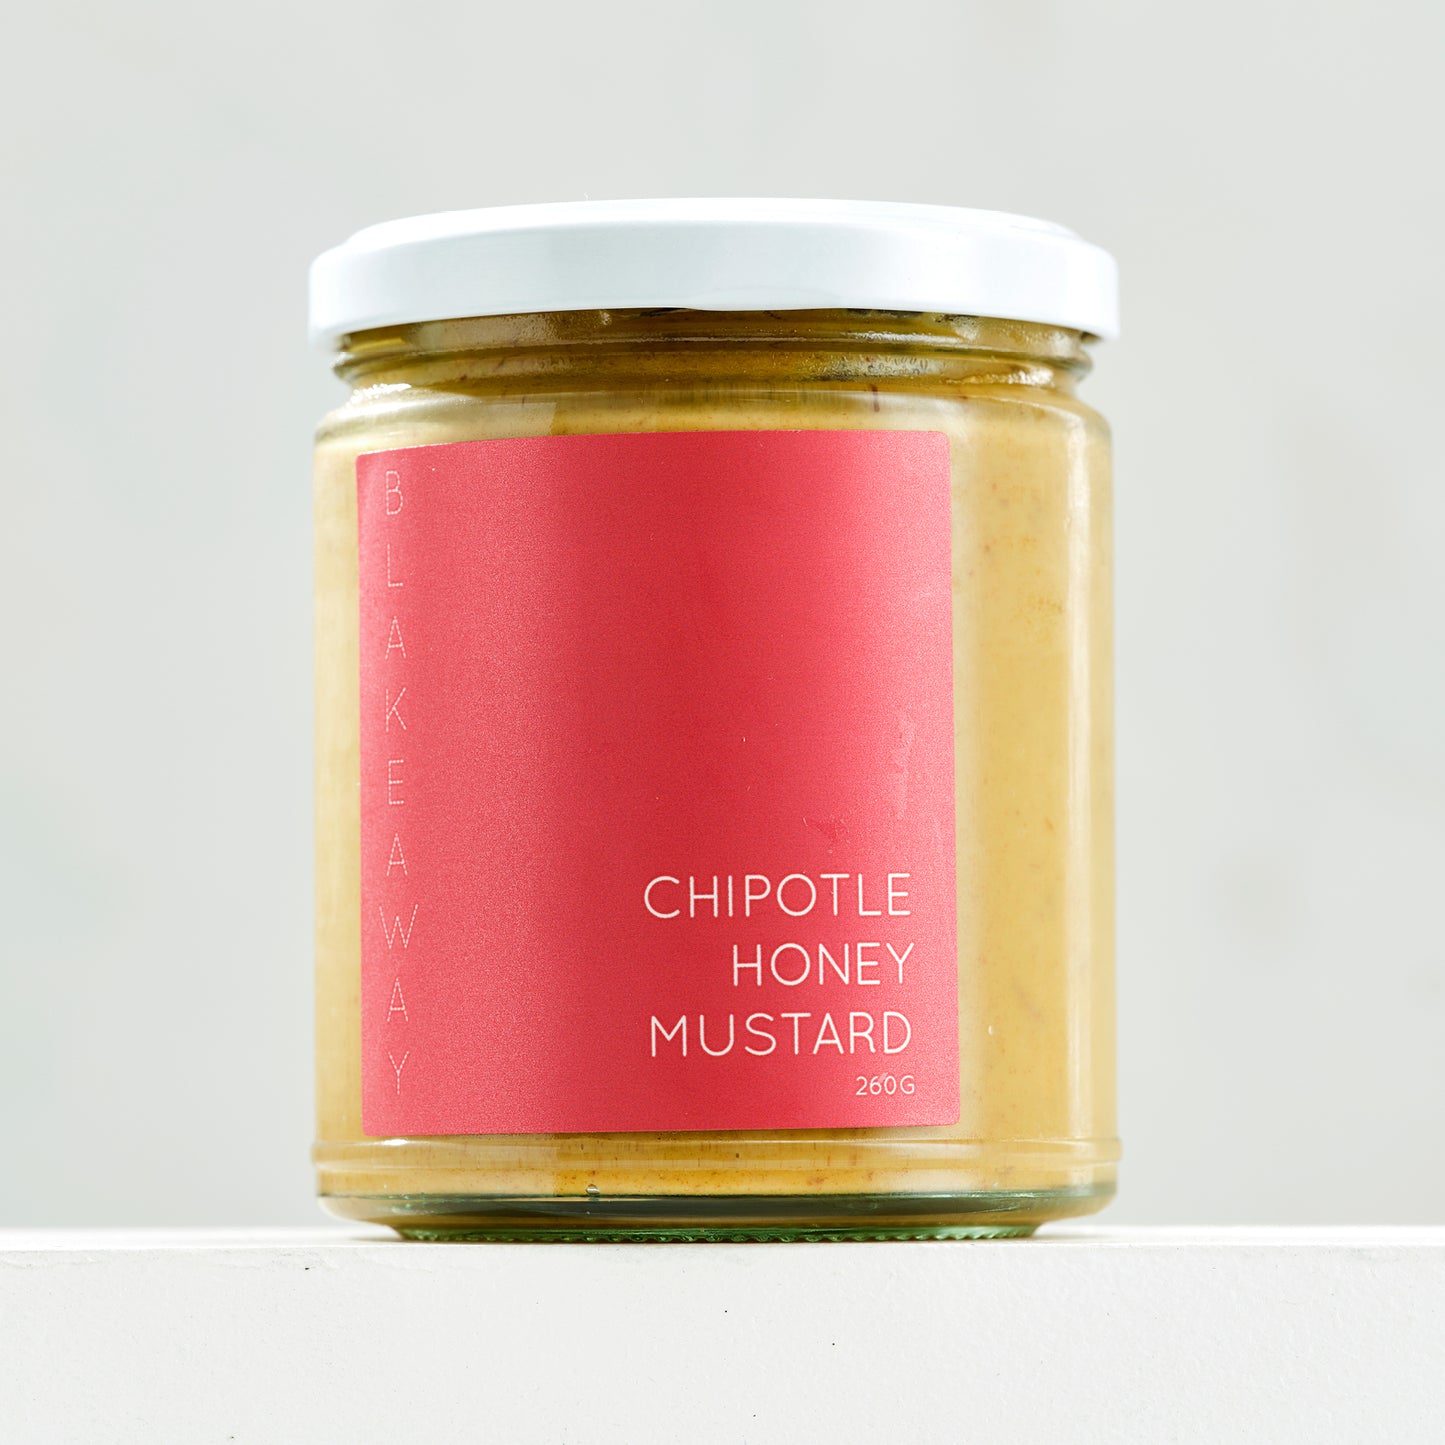 Chipotle Honey Mustard